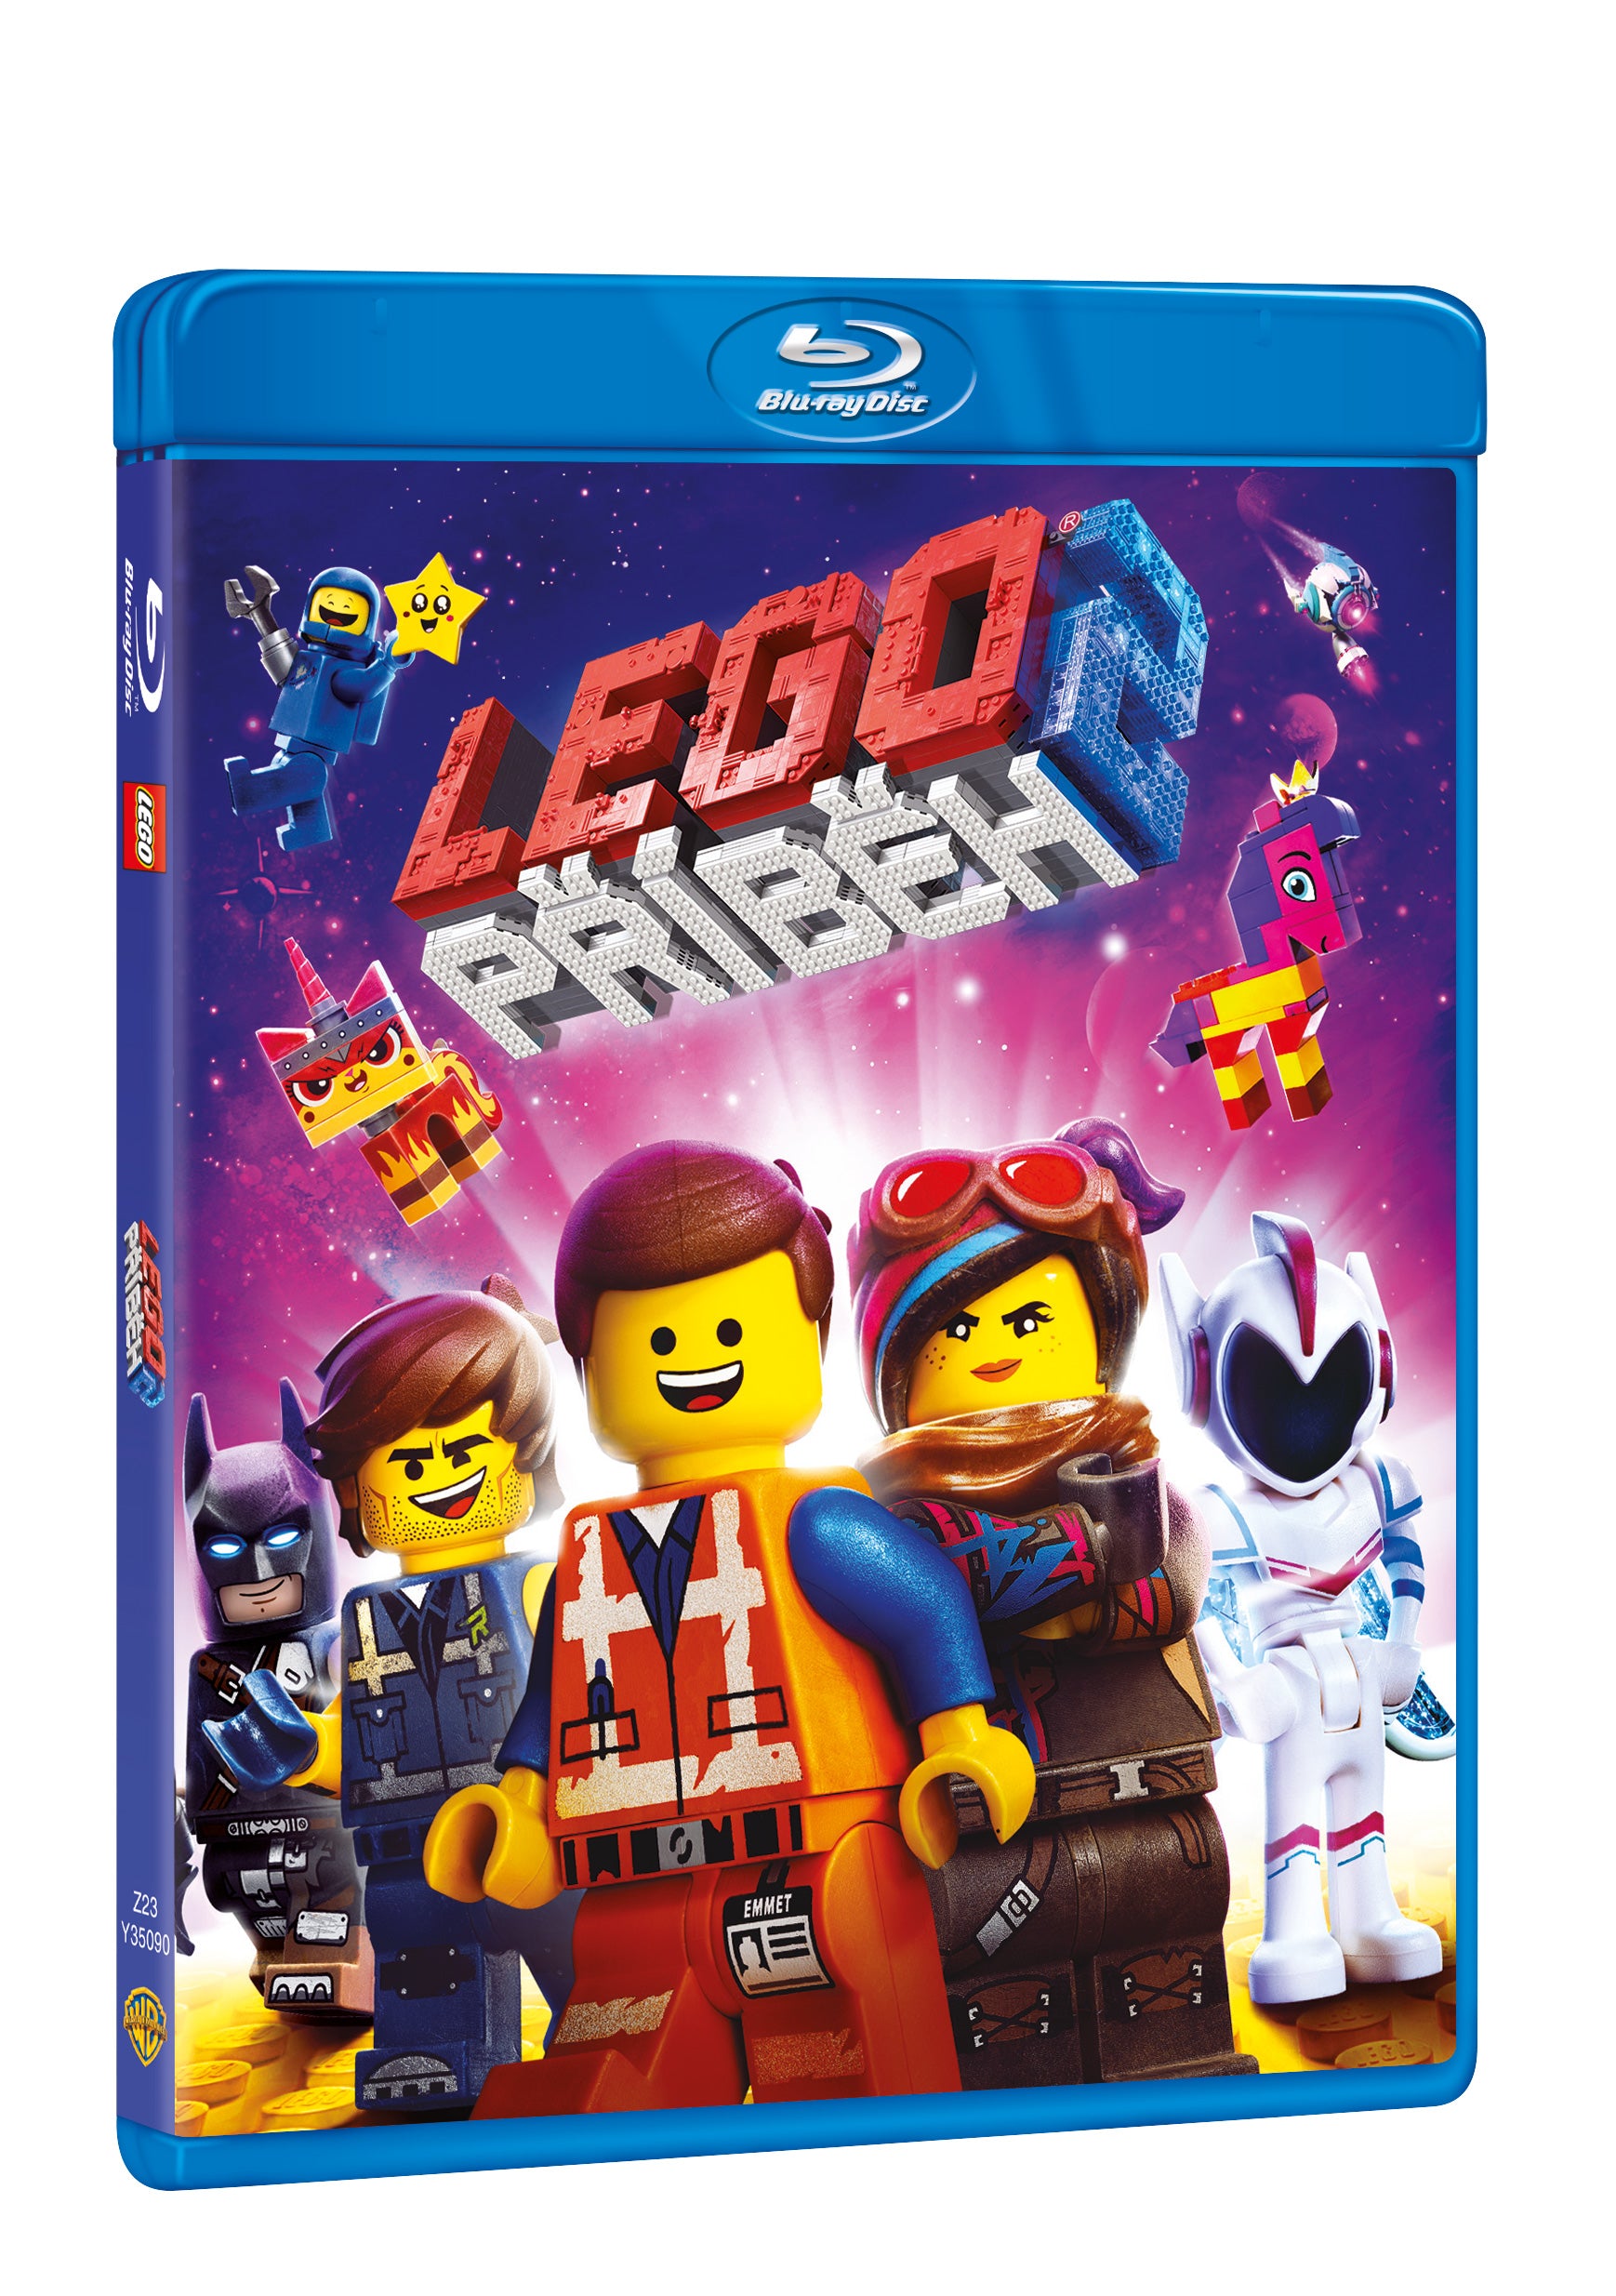 Lego pribeh 2 BD / Lego Movie 2 - Czech version